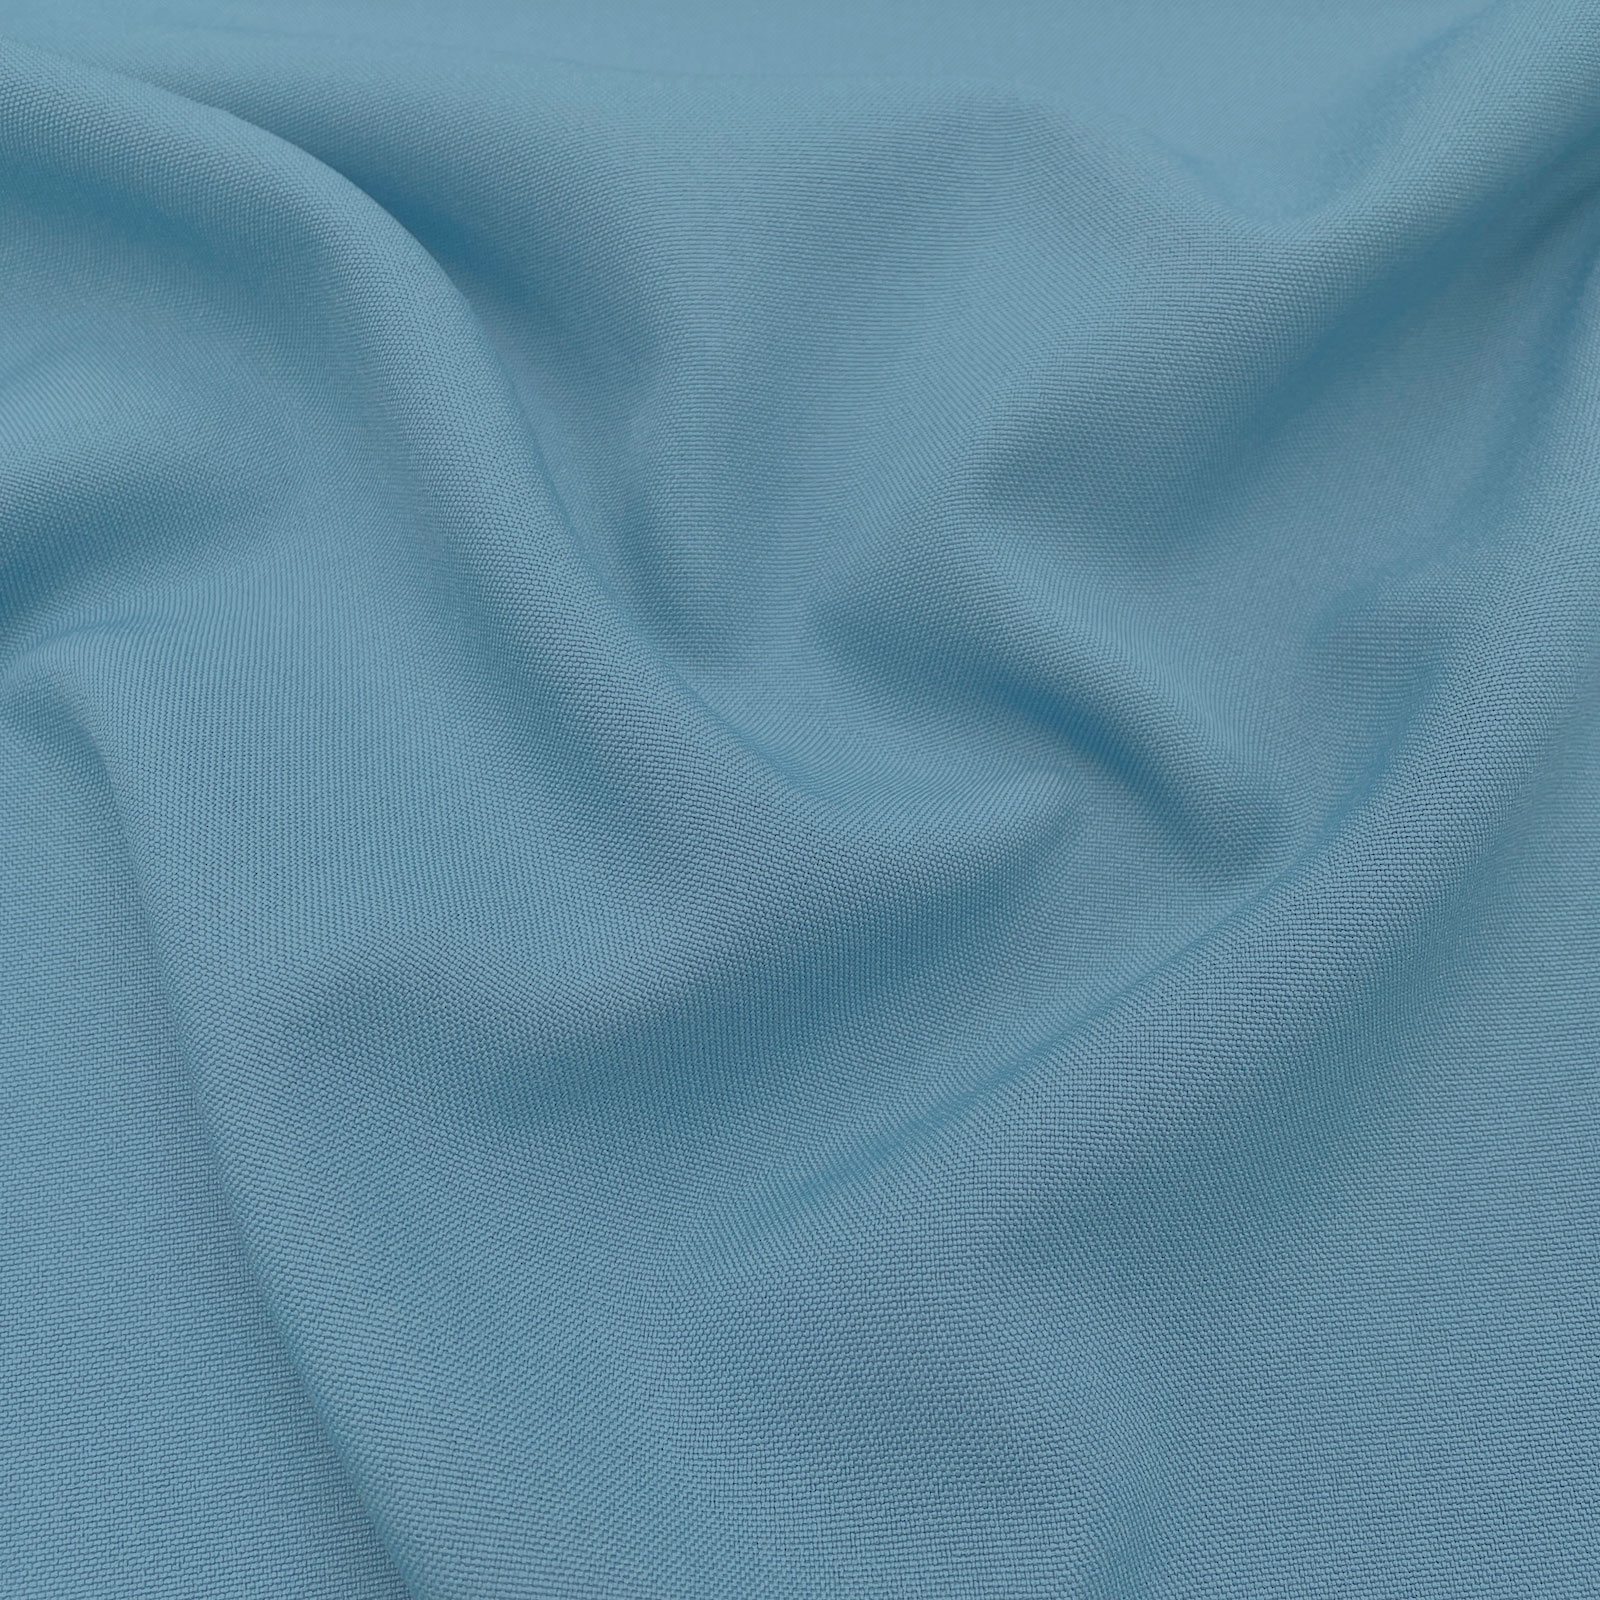 Trekking Functional fabric - slightly elastic & breathable - Sweden Blue